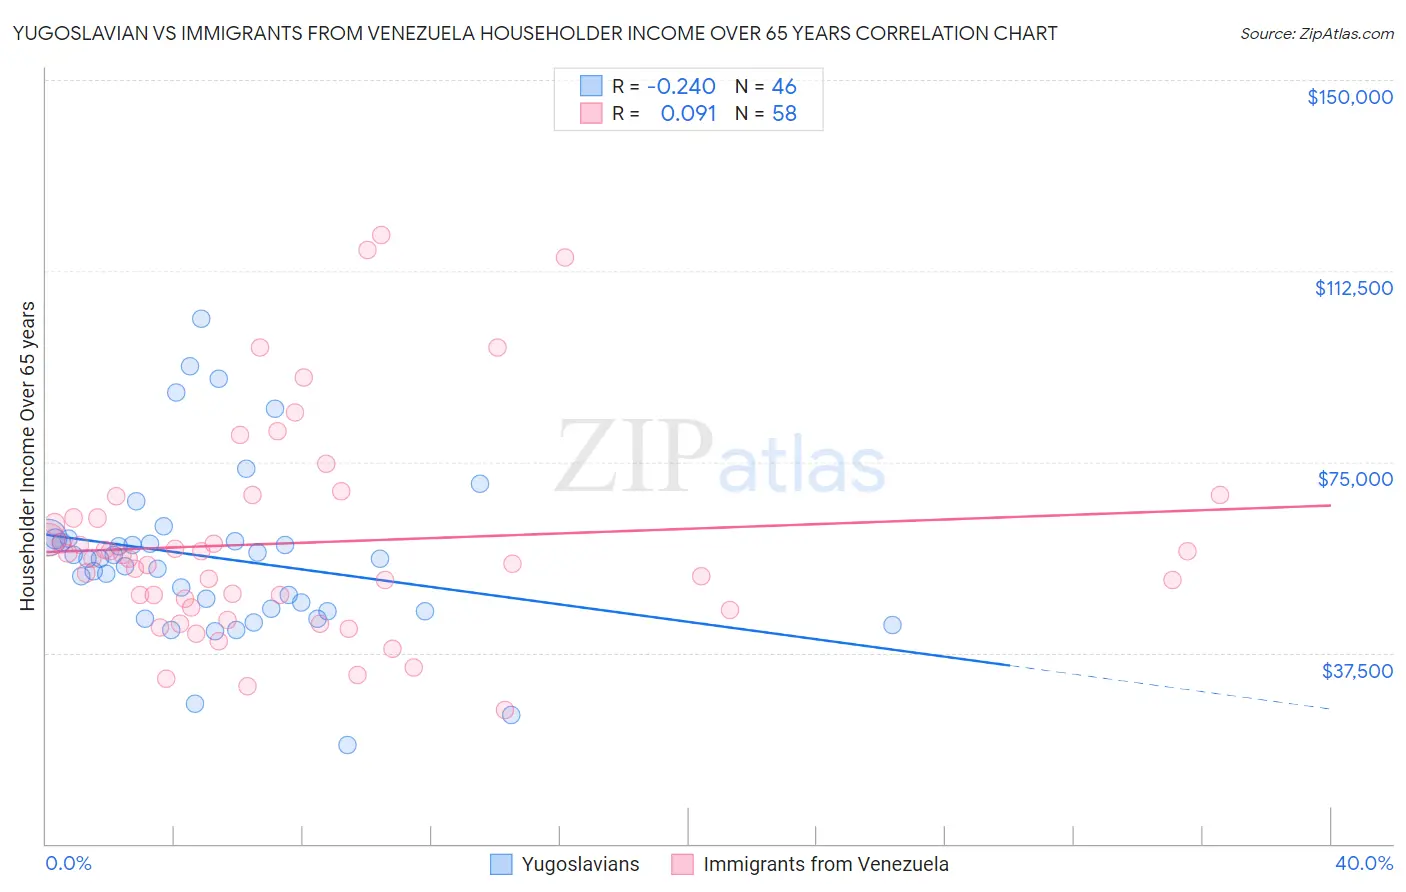 Yugoslavian vs Immigrants from Venezuela Householder Income Over 65 years